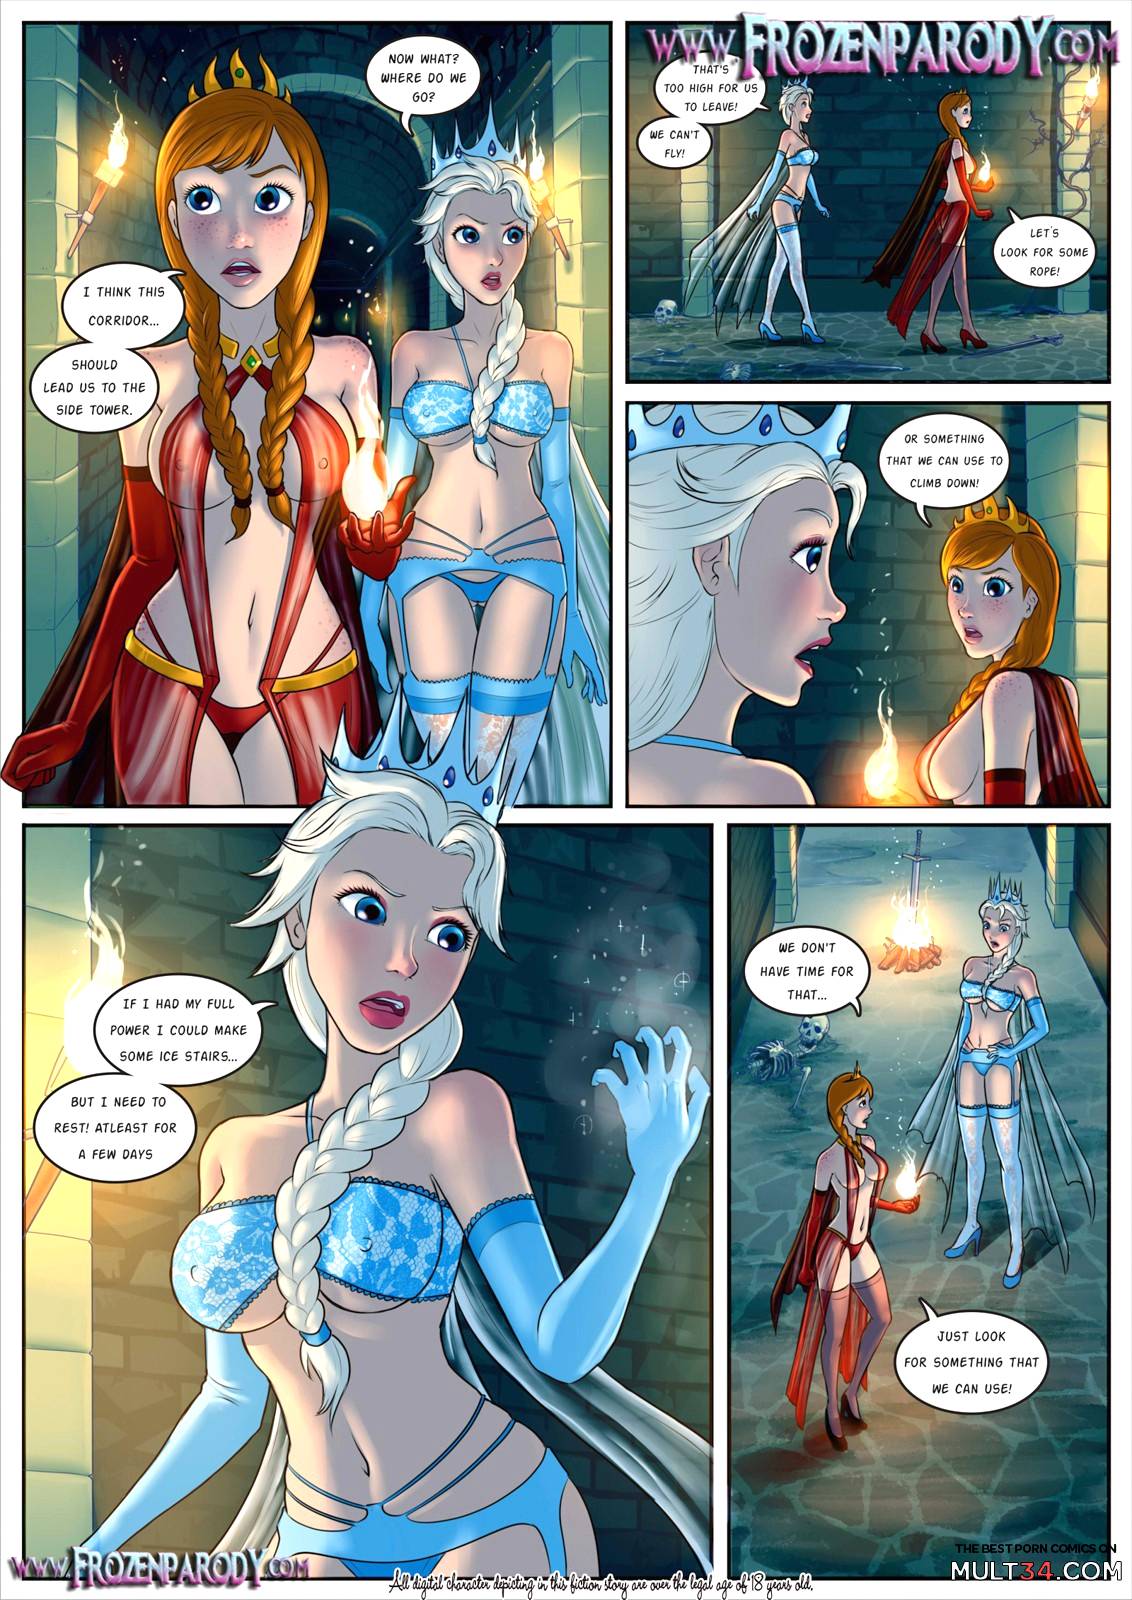 Frozen Cartoon Characters Naked - Frozen Parody 5 porn comic - the best cartoon porn comics, Rule 34 | MULT34